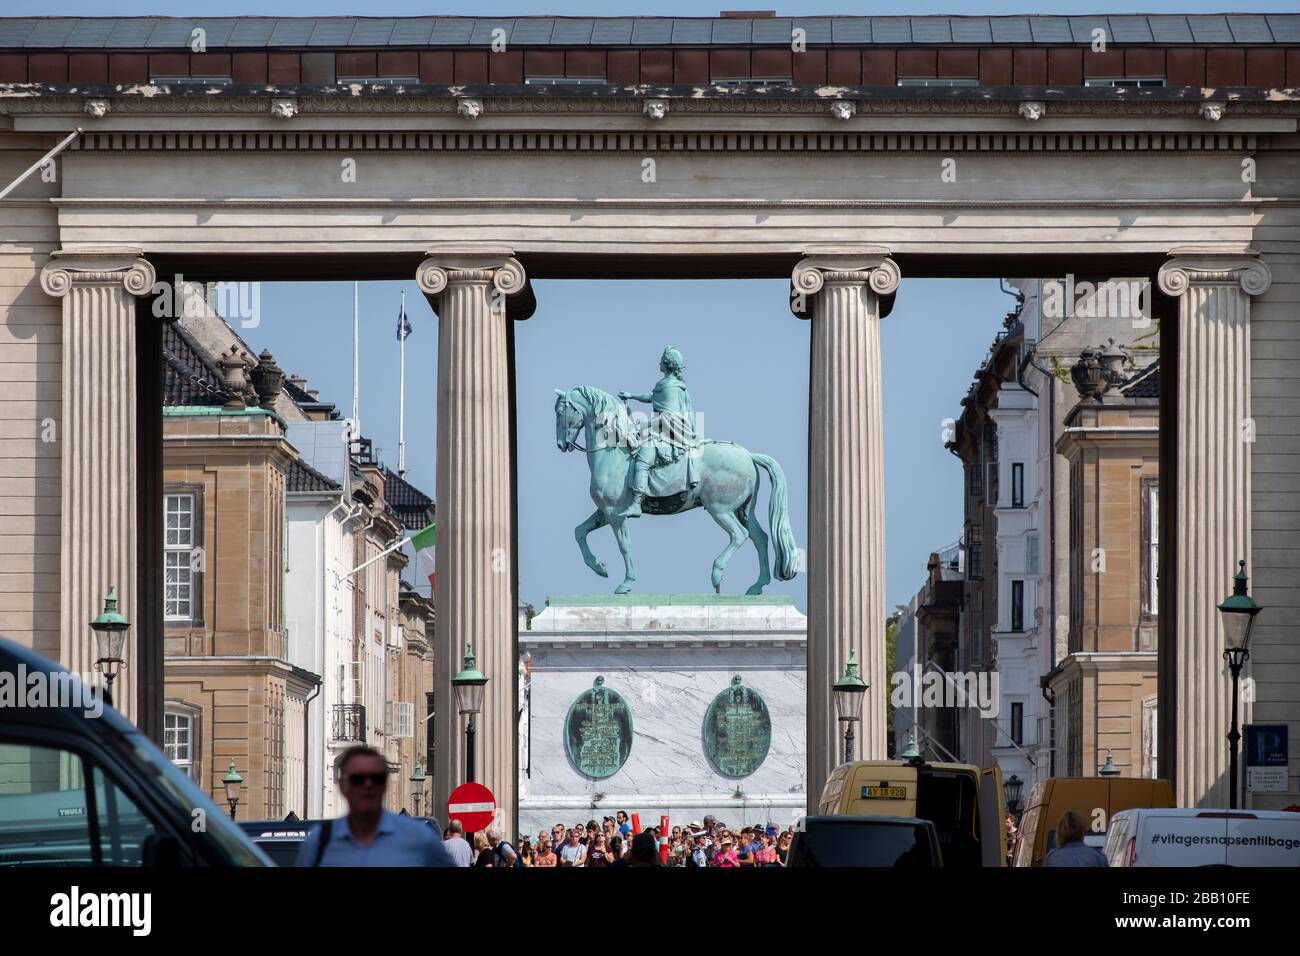 Equestrian statue of King Frederick V of Denmark in the center of Amalienborg Square, Amalienborg Palace, Copenhagen, Denmark, Europe Stock Photo